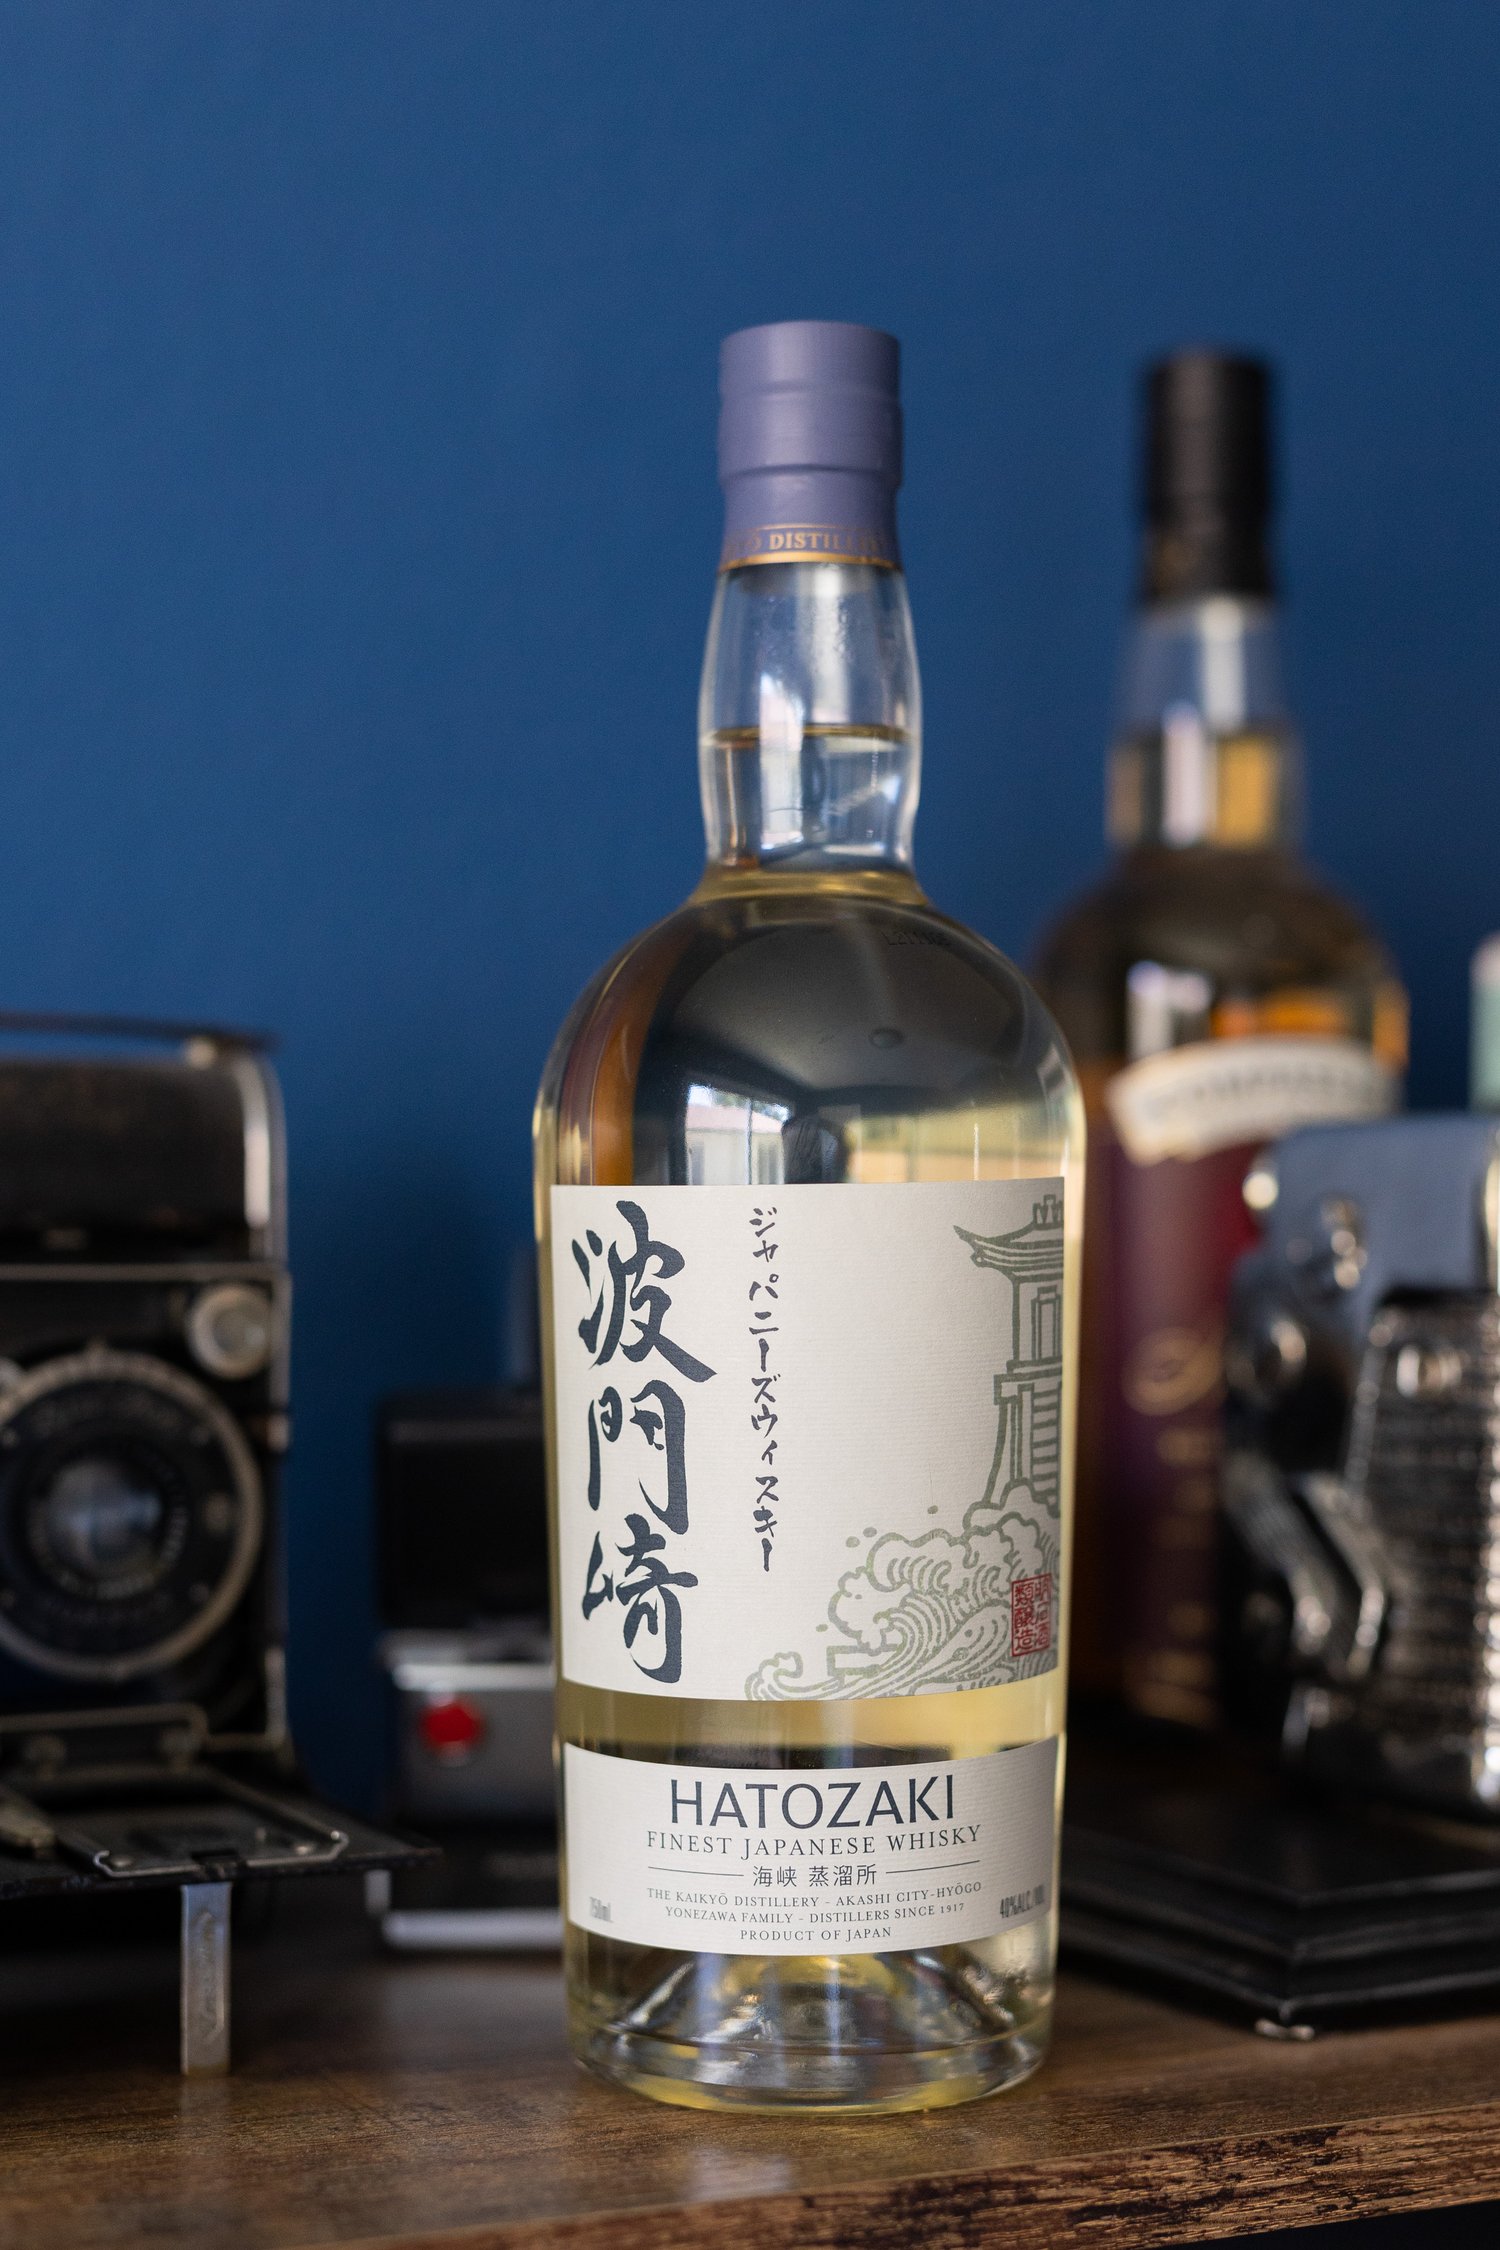 Hatozaki Finest Japanese Whisky The — Review Whisky Study